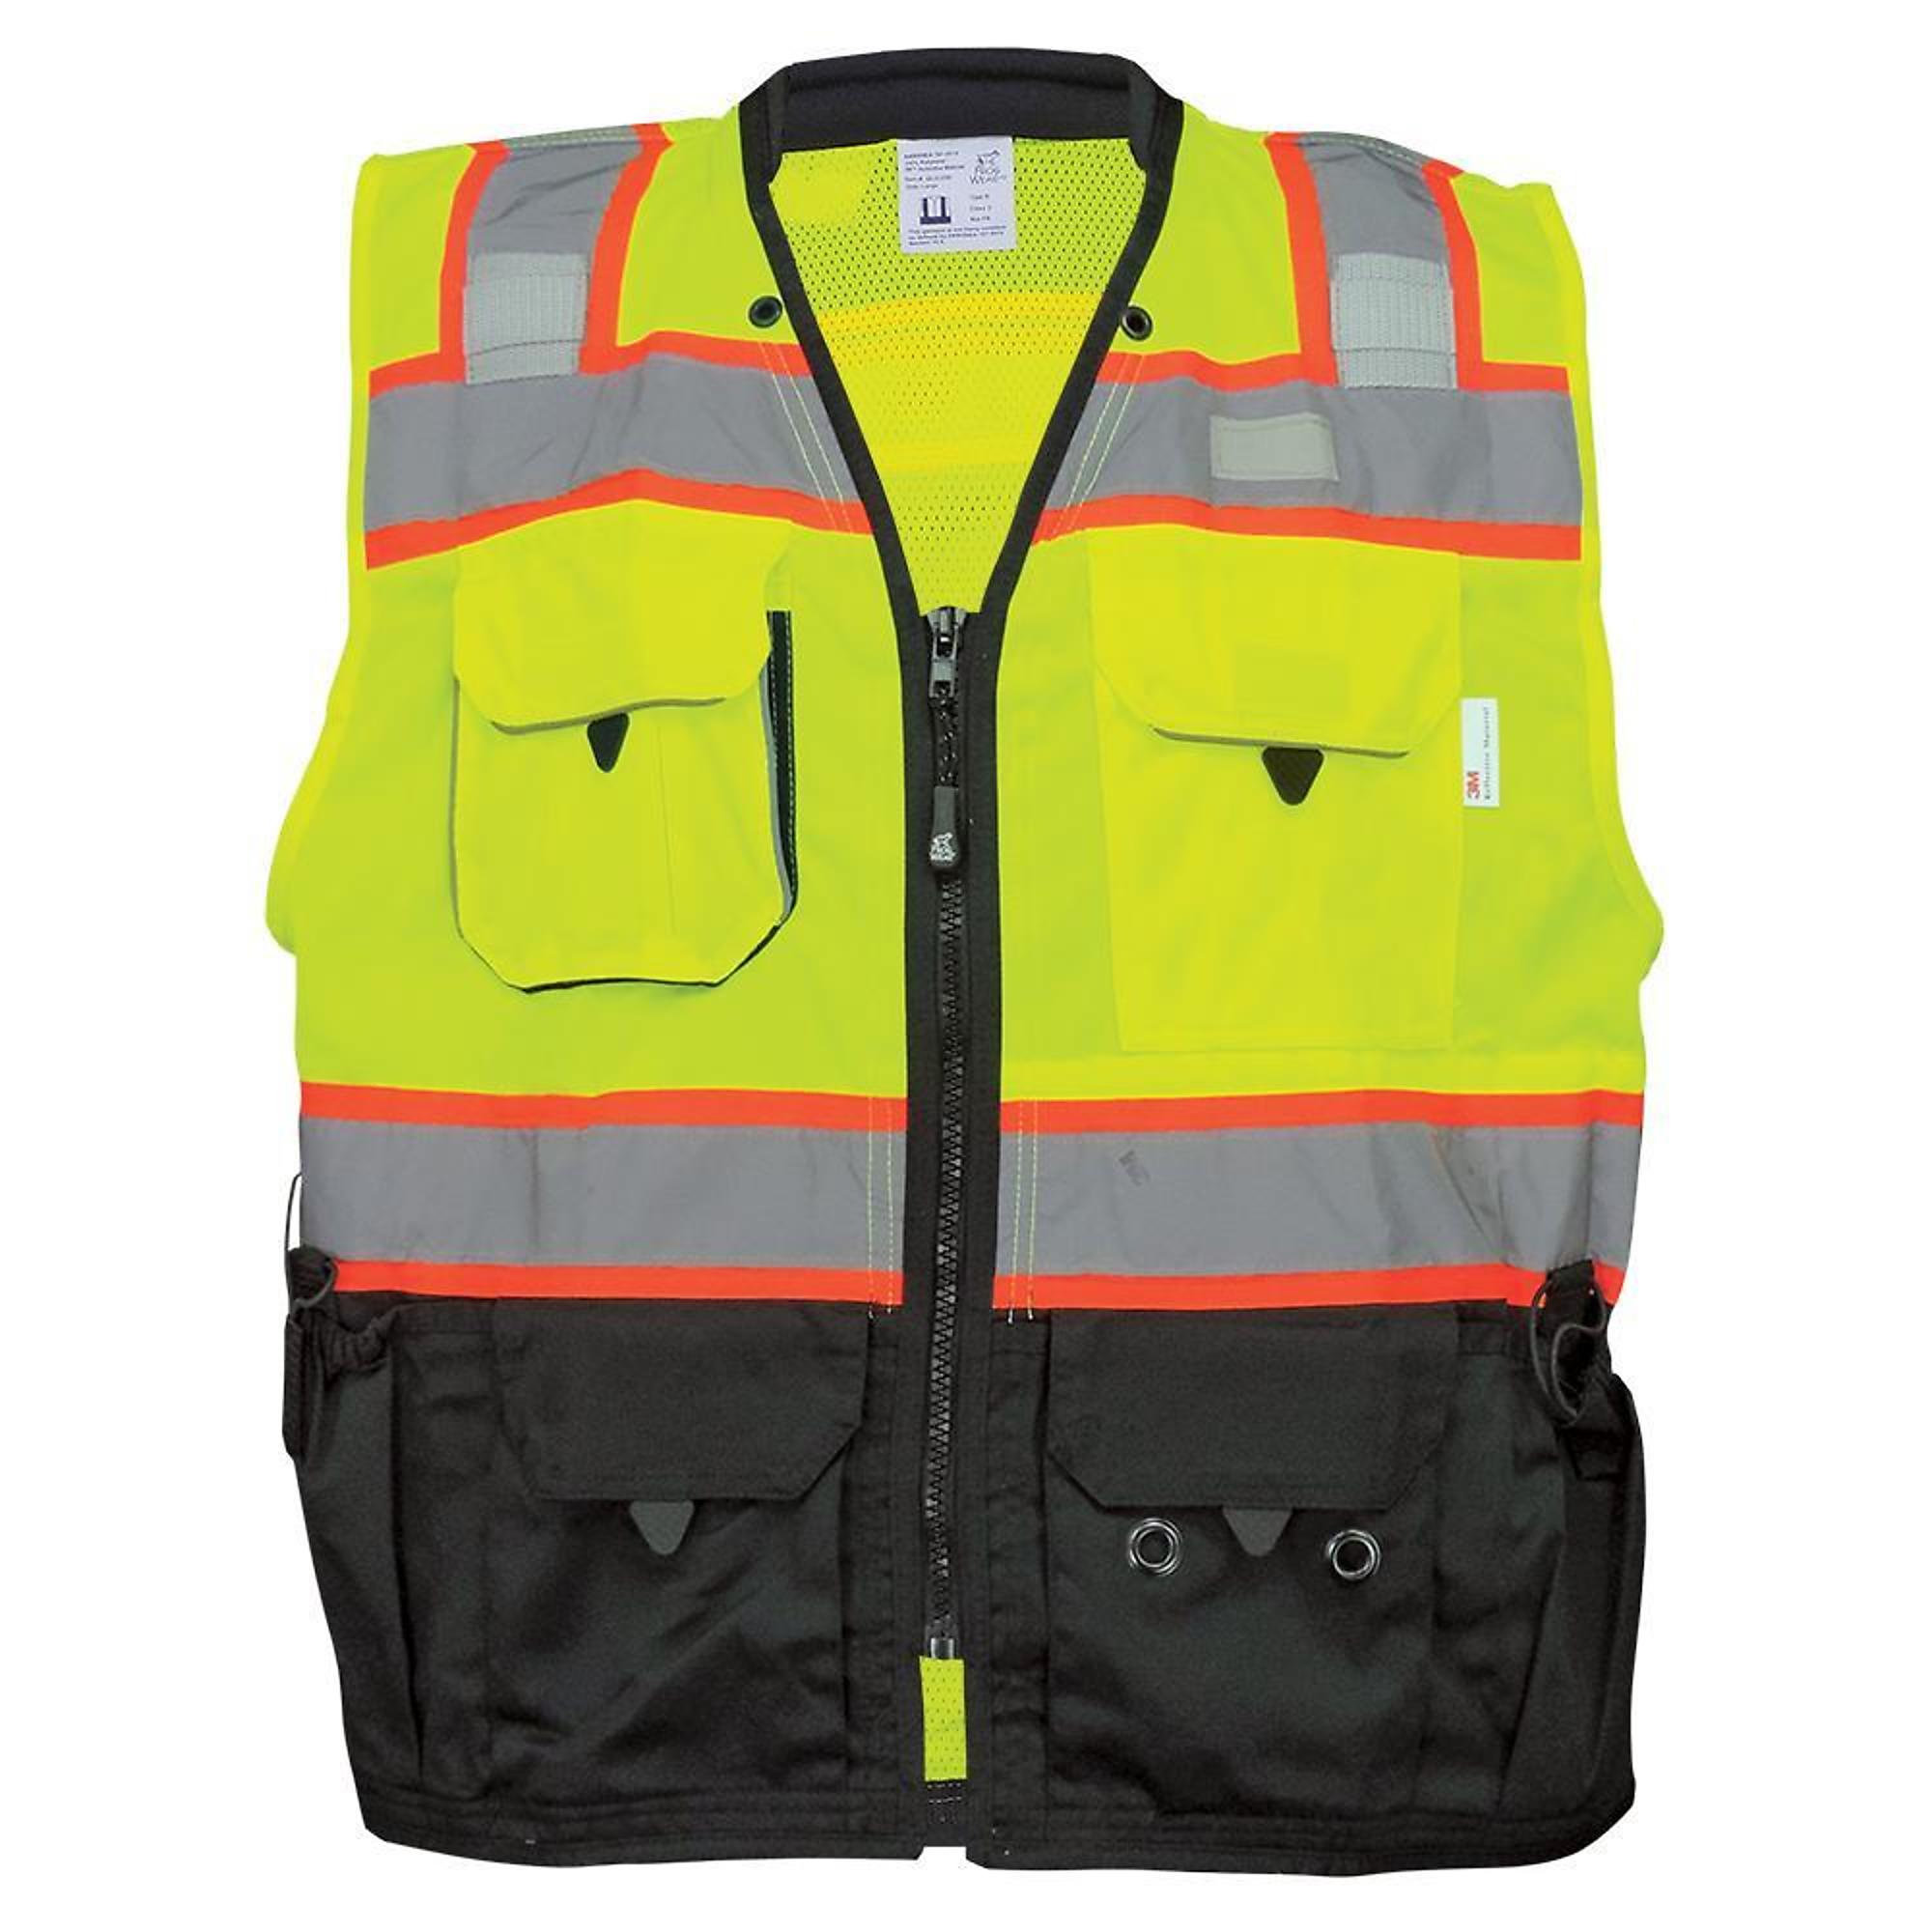 FrogWear Surveyors Safety Vest, 3XL, Yellow/Green, Model GLO-099-3XL